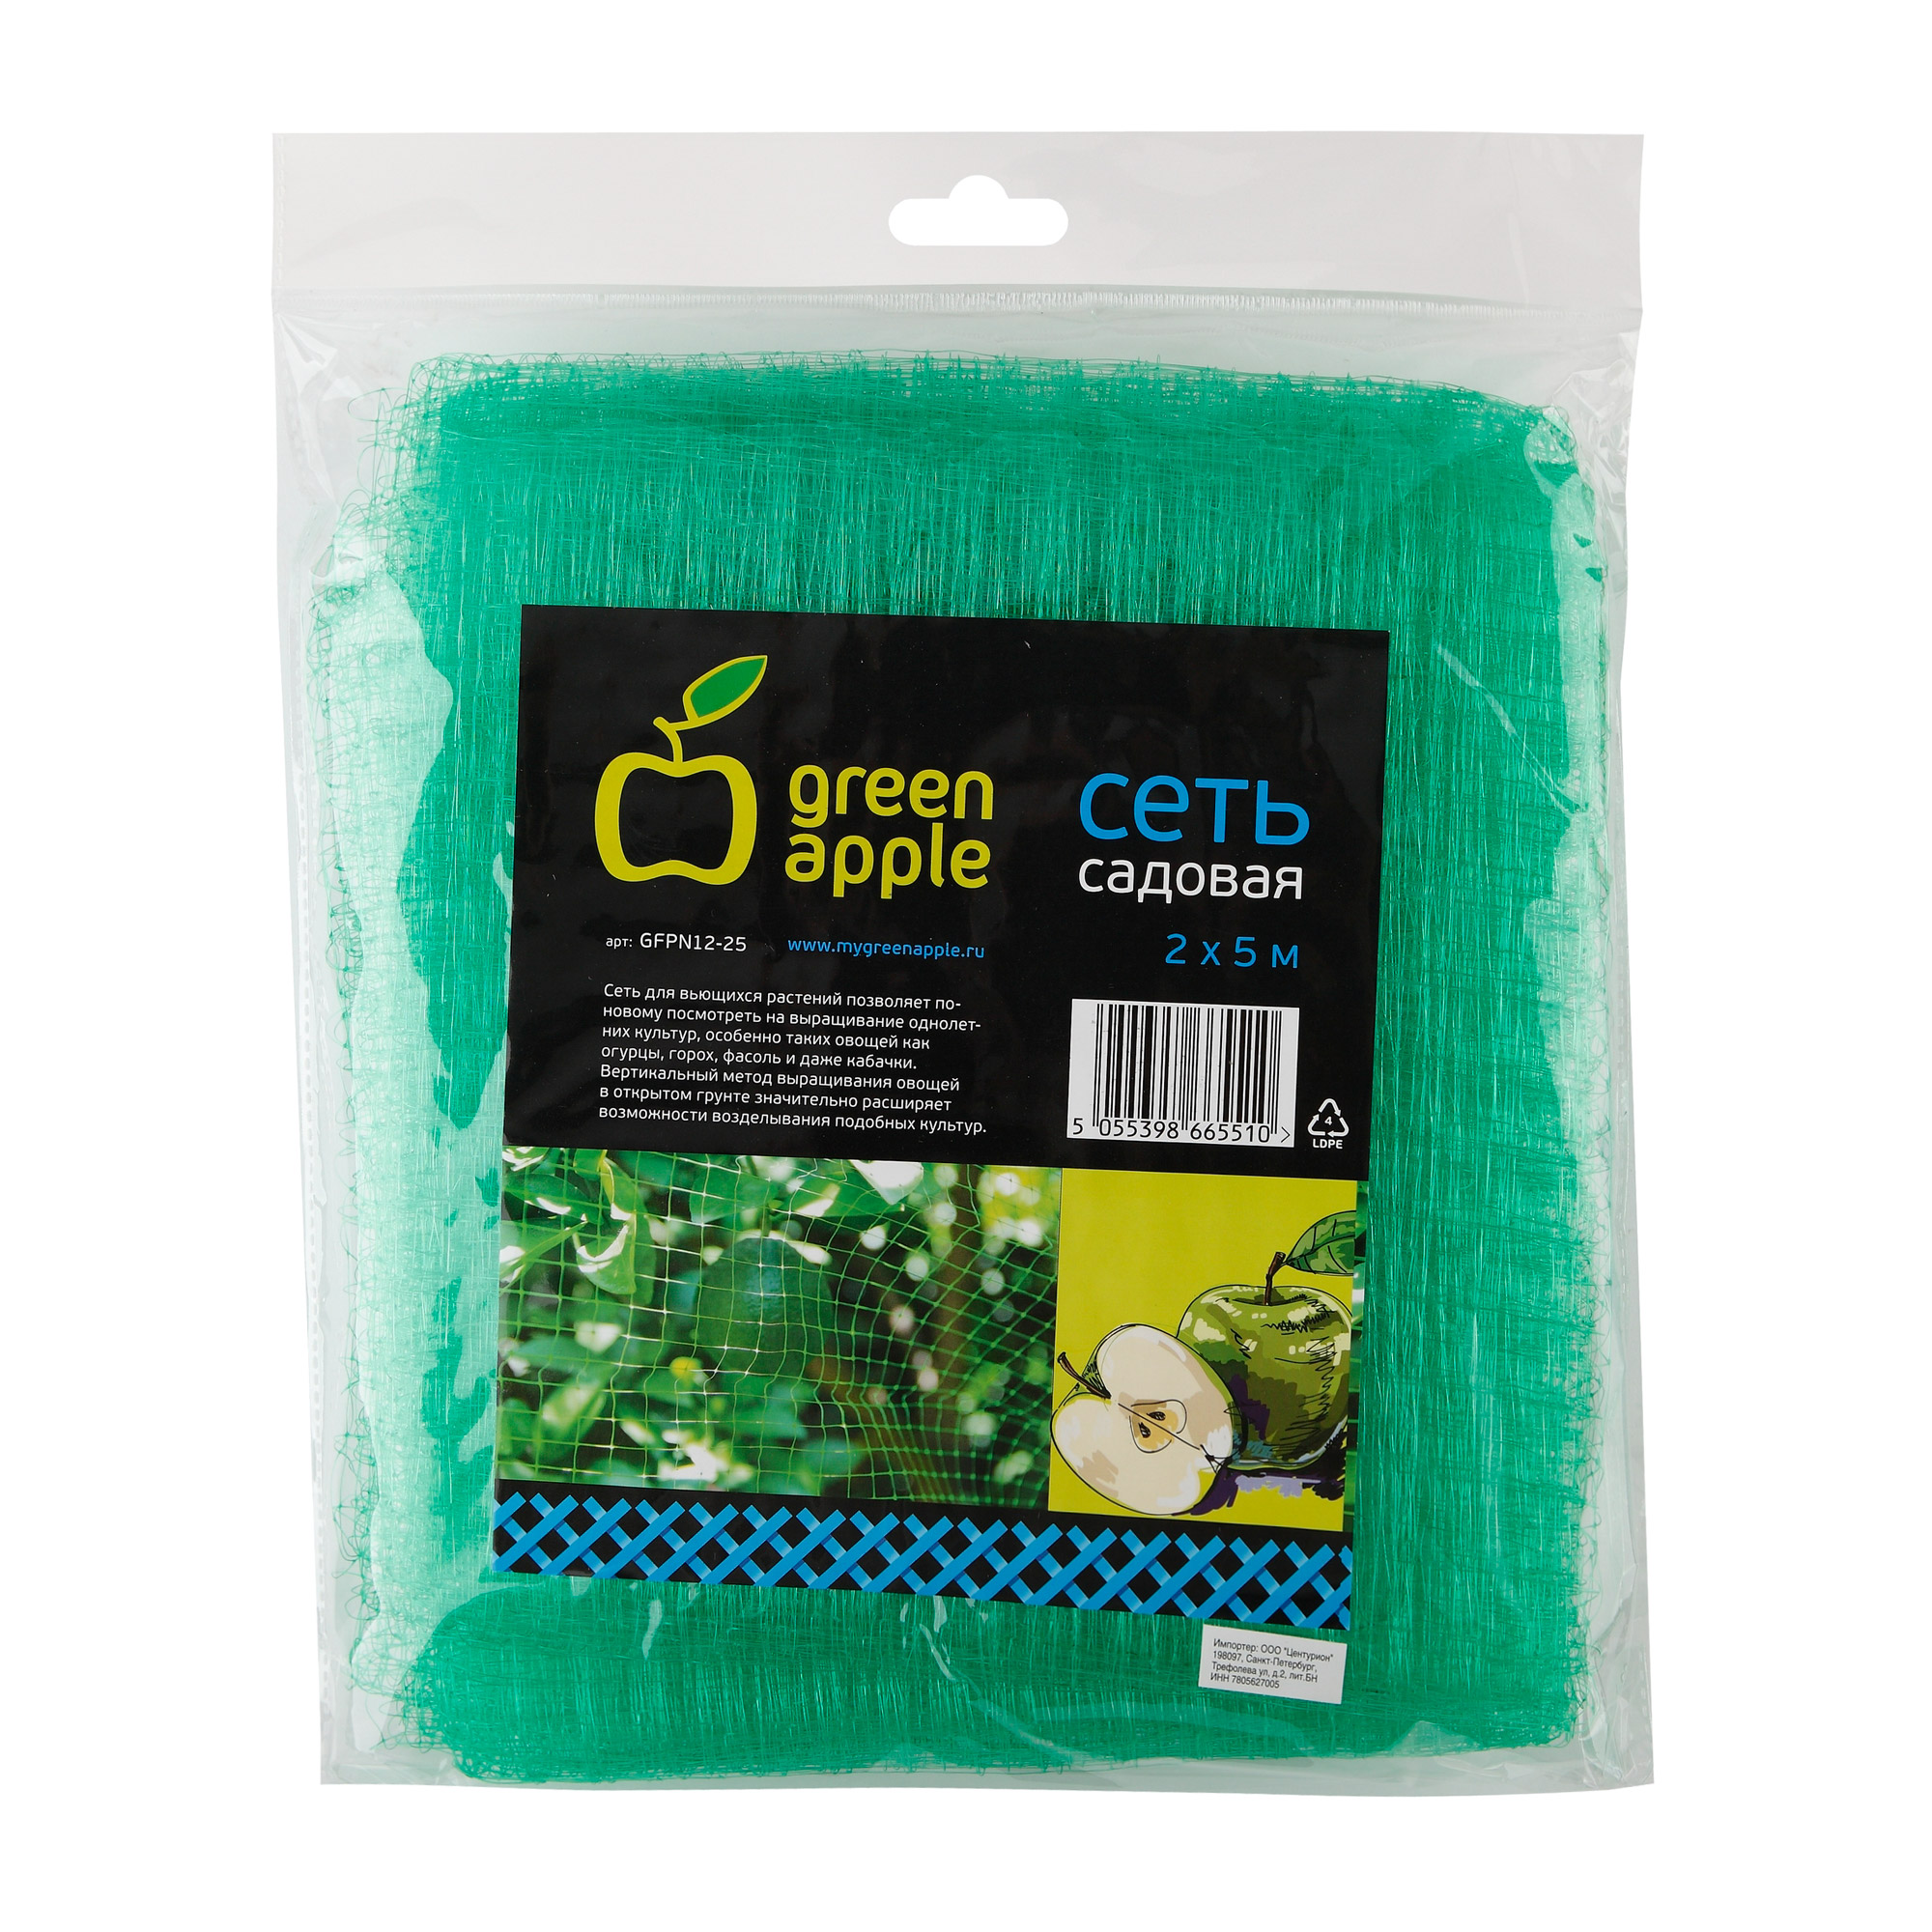 Сеть садовая Green apple GFPN12-25 2х5 м - фото 1